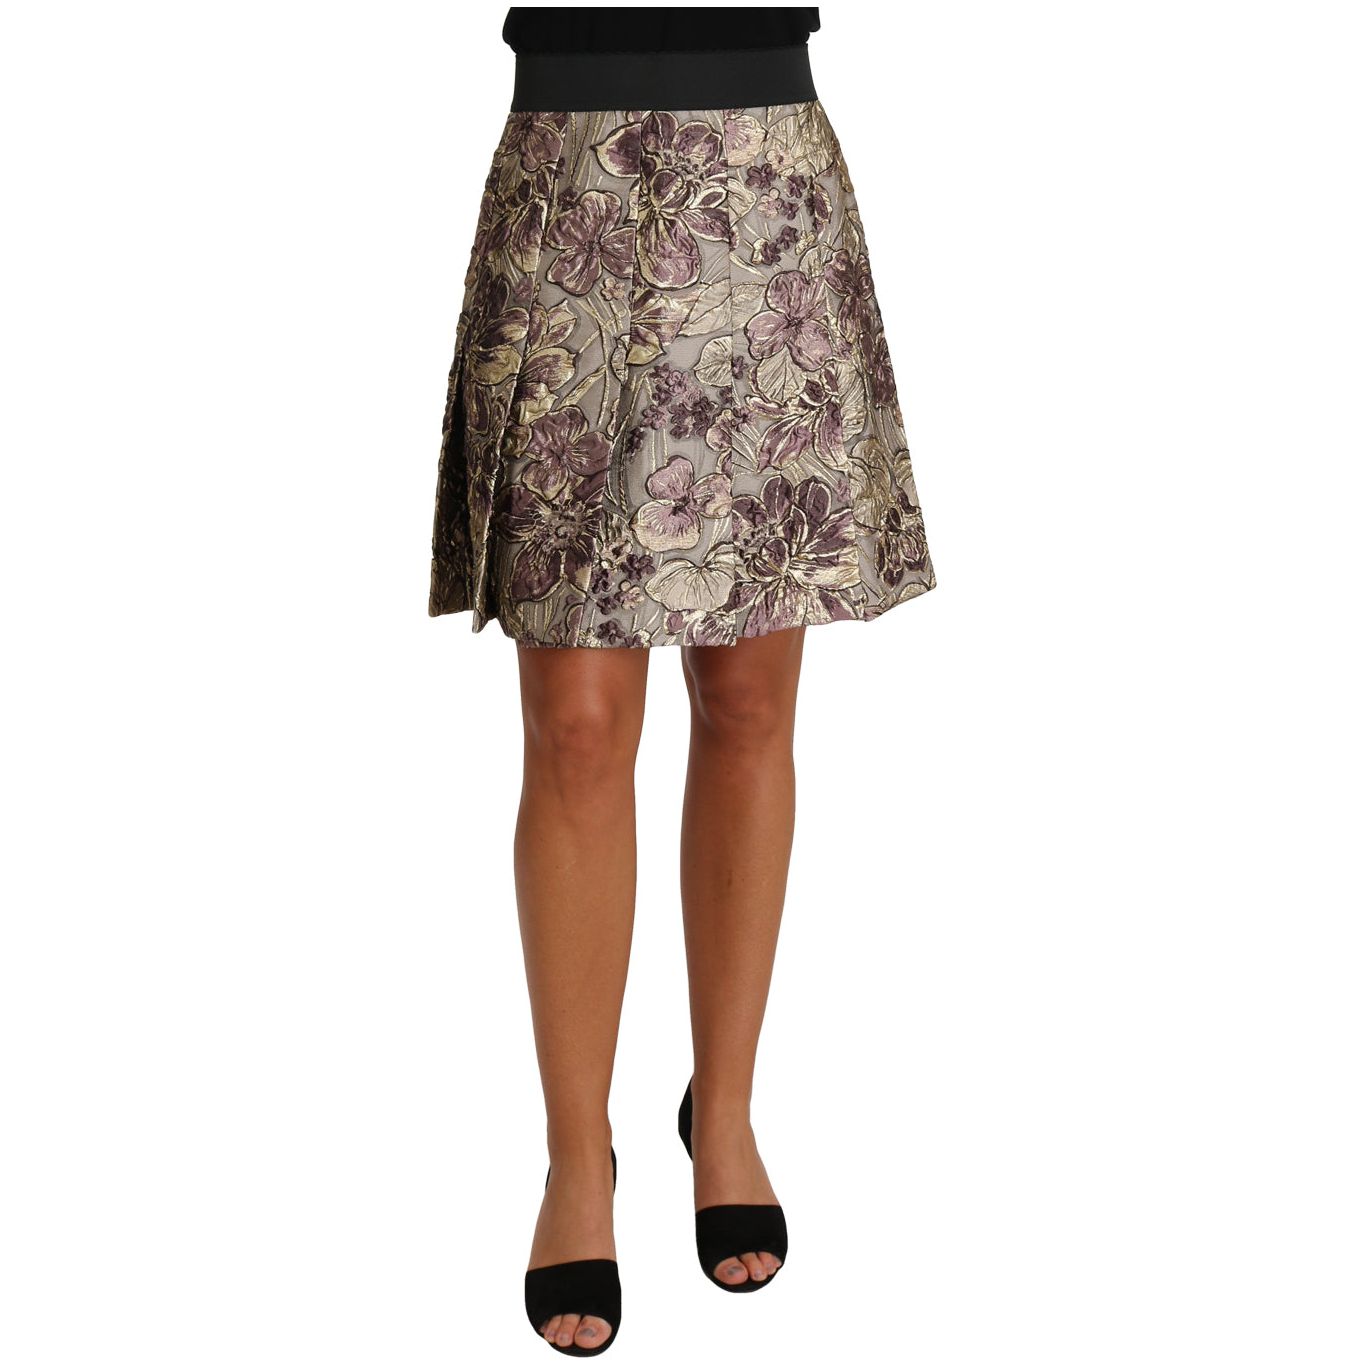 Dolce & Gabbana Floral Jacquard A-Line Skirt Delight Skirt a-line-mini-floral-print-jaquard-skirt-1 657513-a-line-mini-floral-print-jaquard-skirt-2.jpg